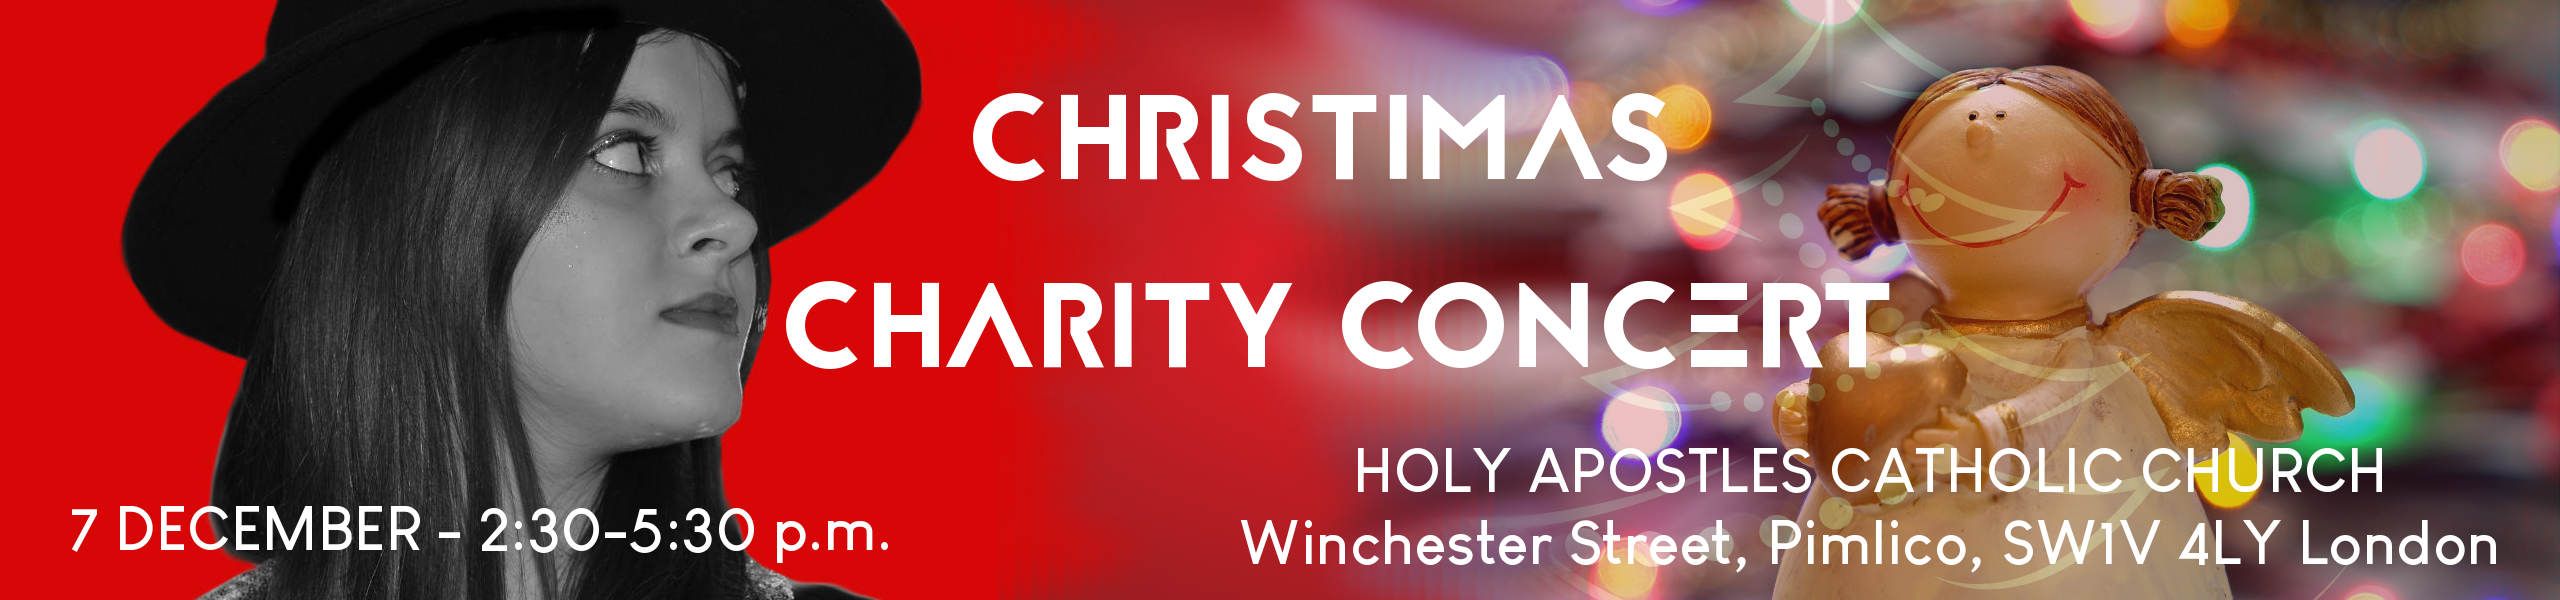 Christmas Charity Concert - JOY - London - Elisa Neri